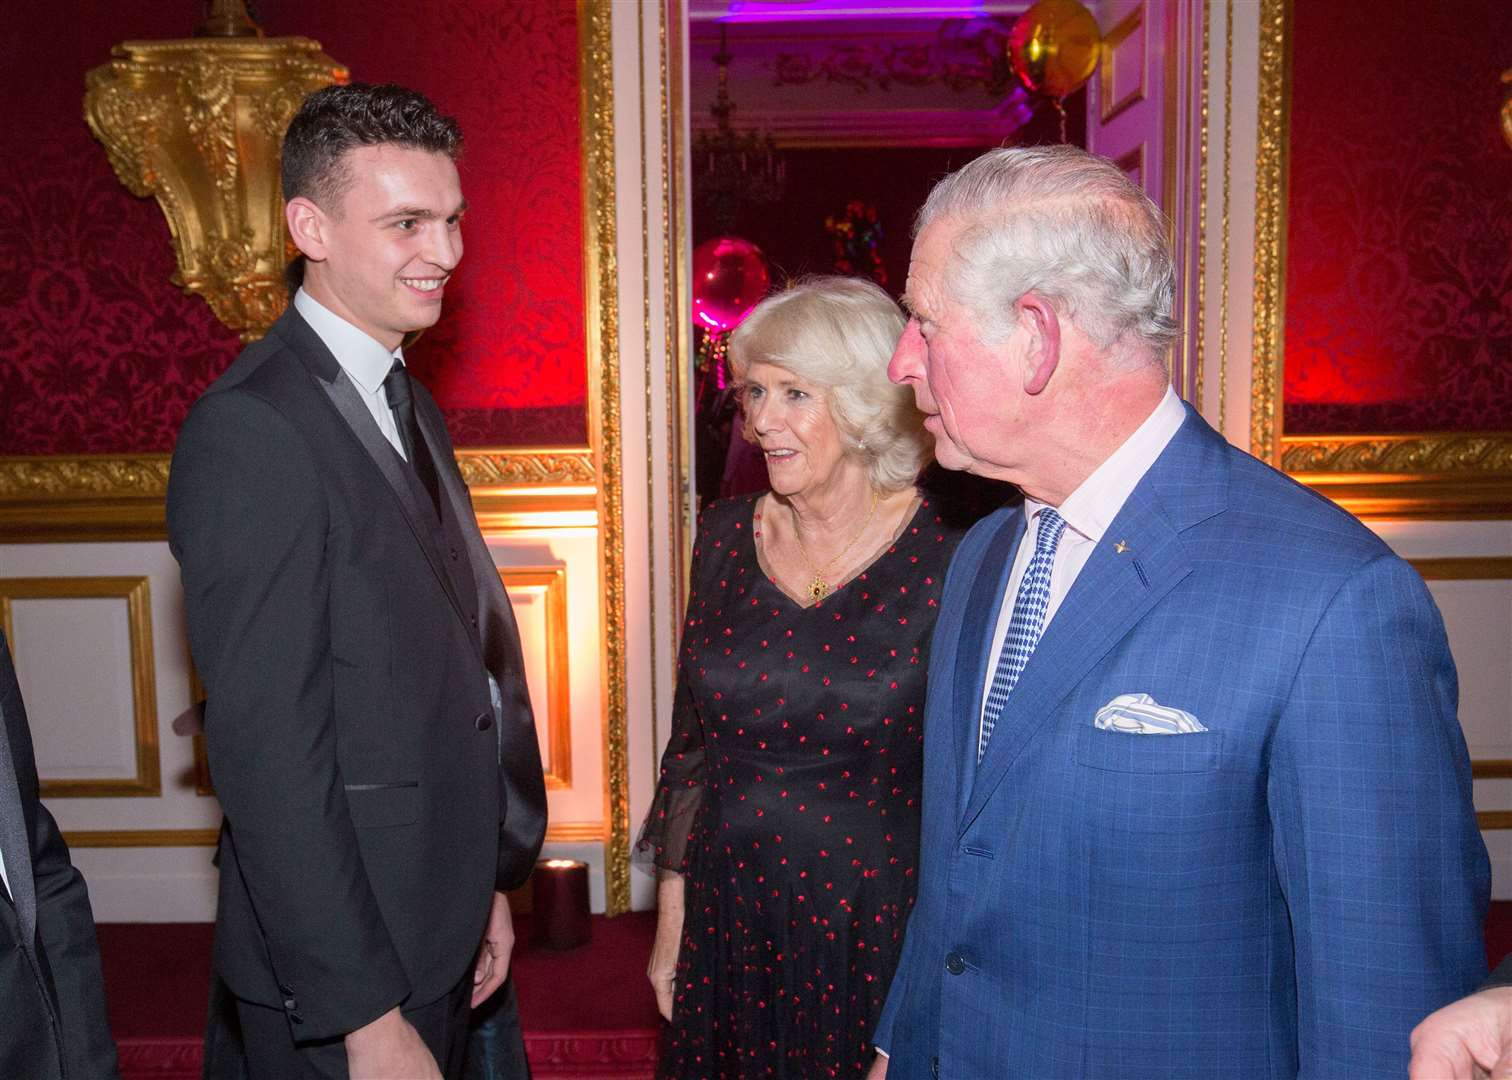 Joshua King meets Prince Charles and Camilla at the royal's Christmas party. Picture: Ian Jones